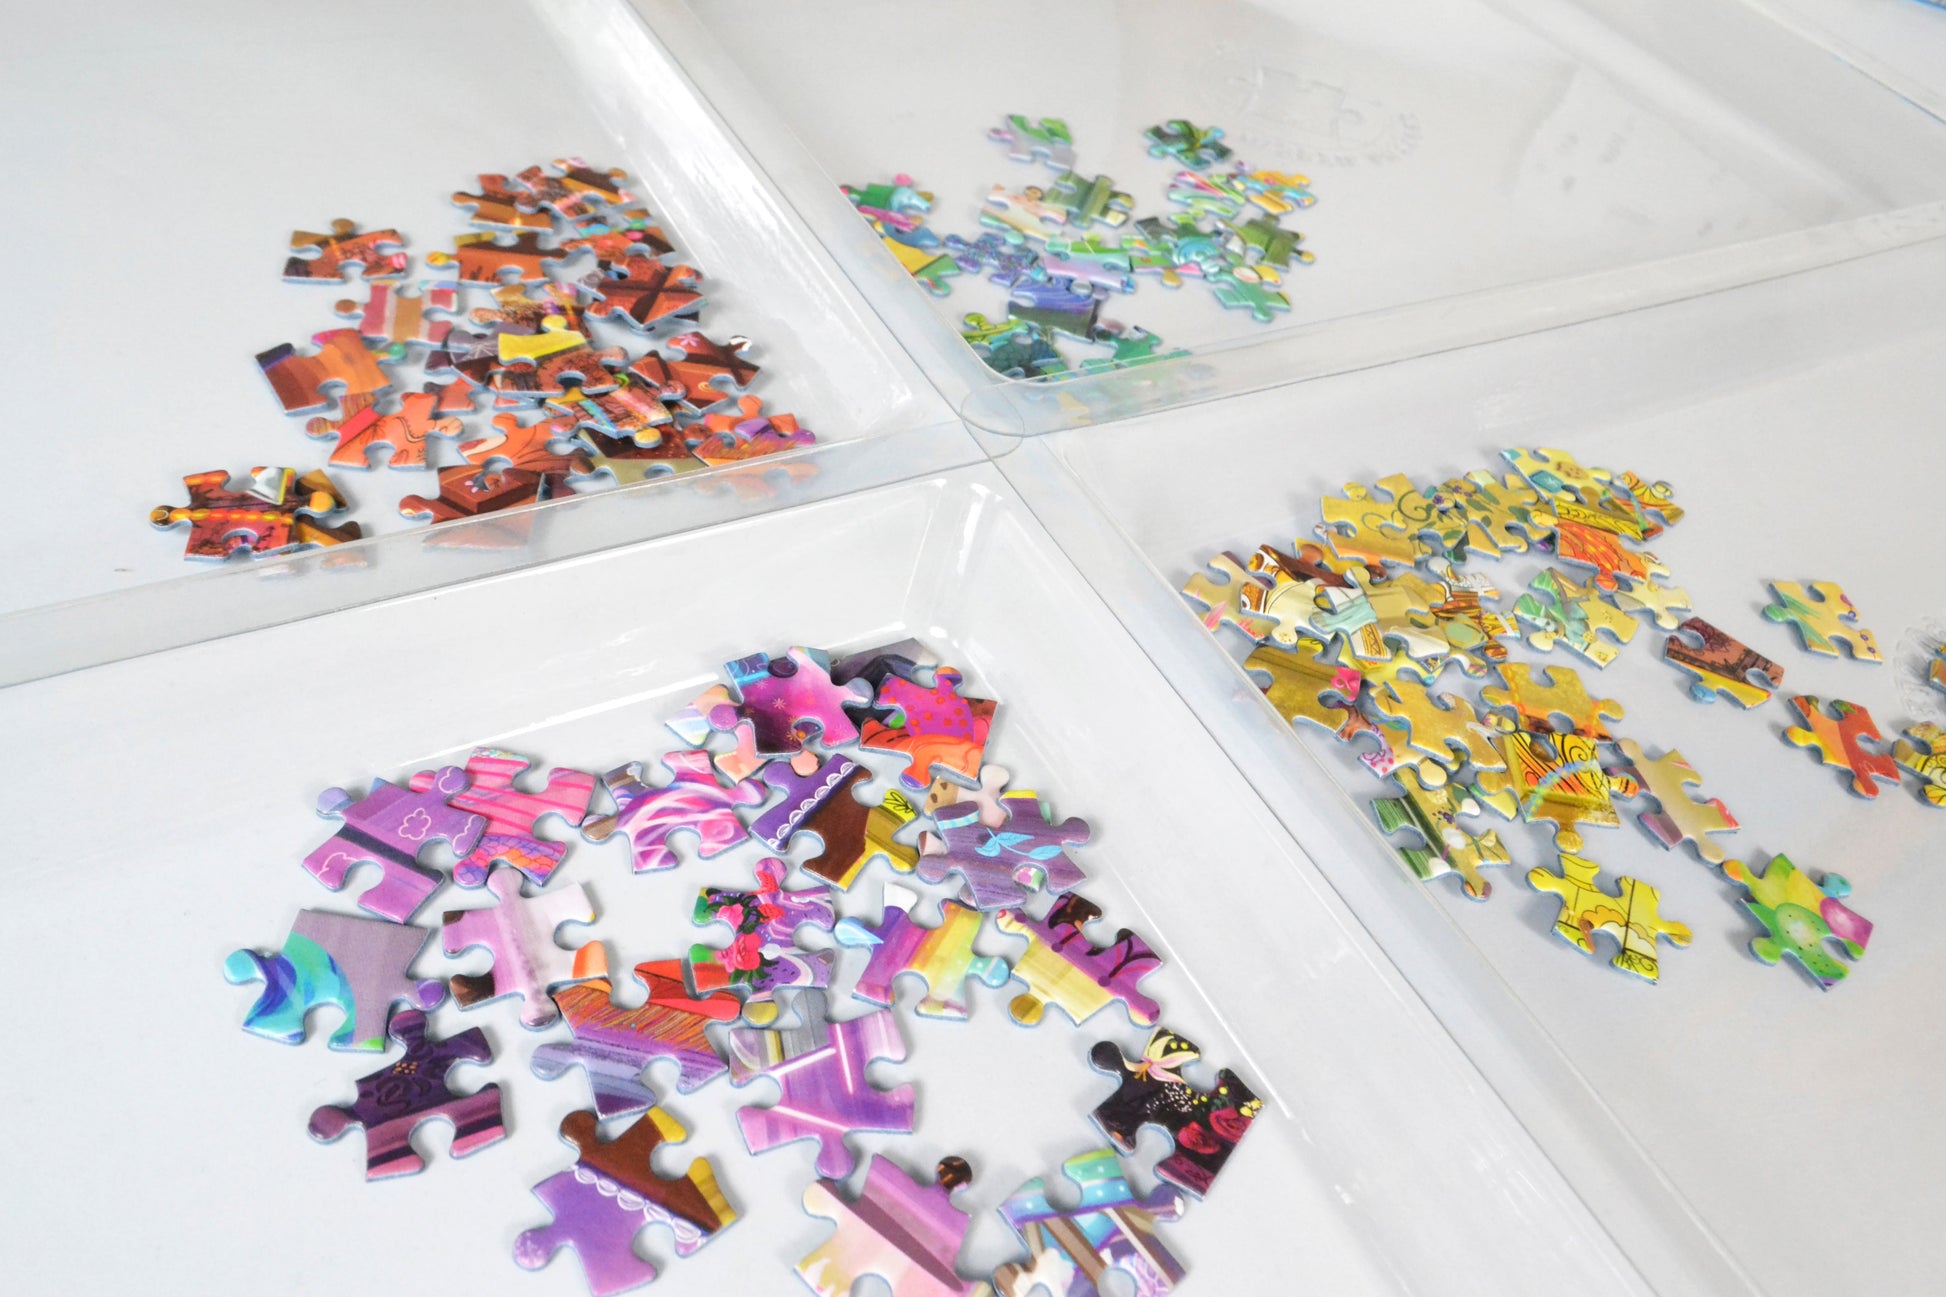 Jigitz Jigsaw Puzzle Sorter Trays 7.9 x 7.9 - 6PK Plastic Puzzle Organizer  Trays in Green